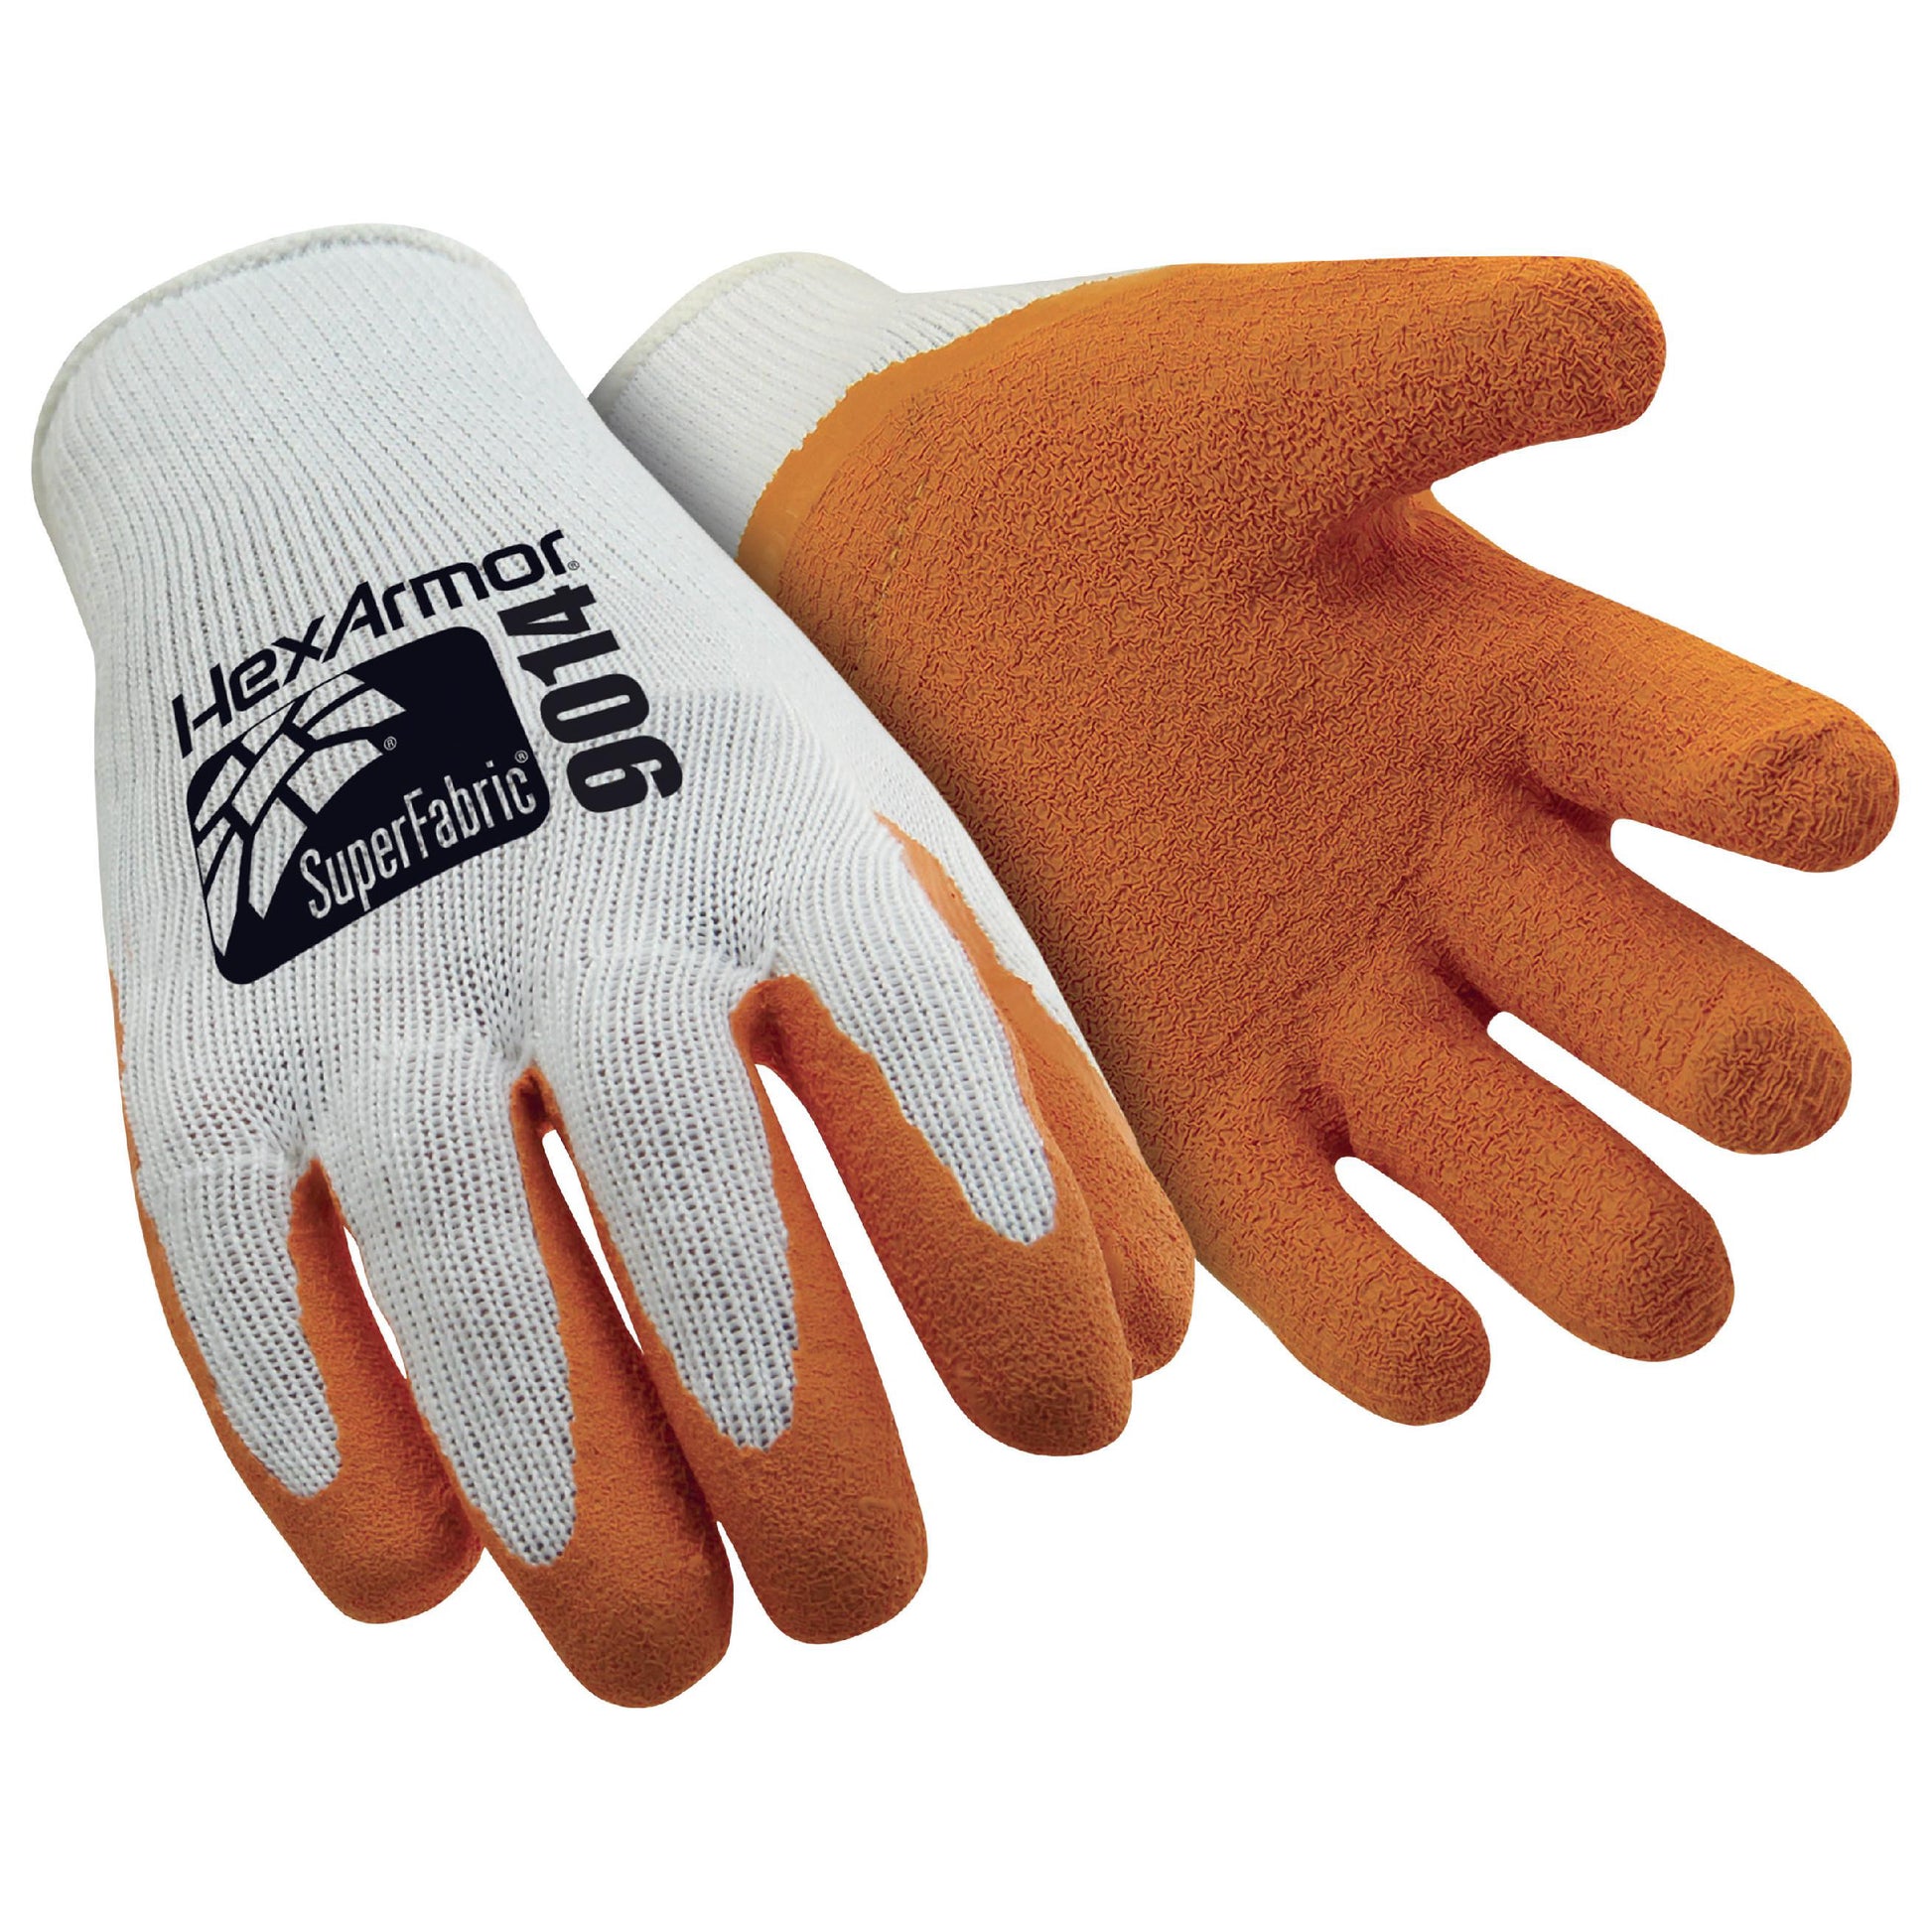 Hexarmor 9014 Sharpsmaster Needle-stick gloves, sharps resistant. Waste management, facilities, washrooms, maintenance. protexu